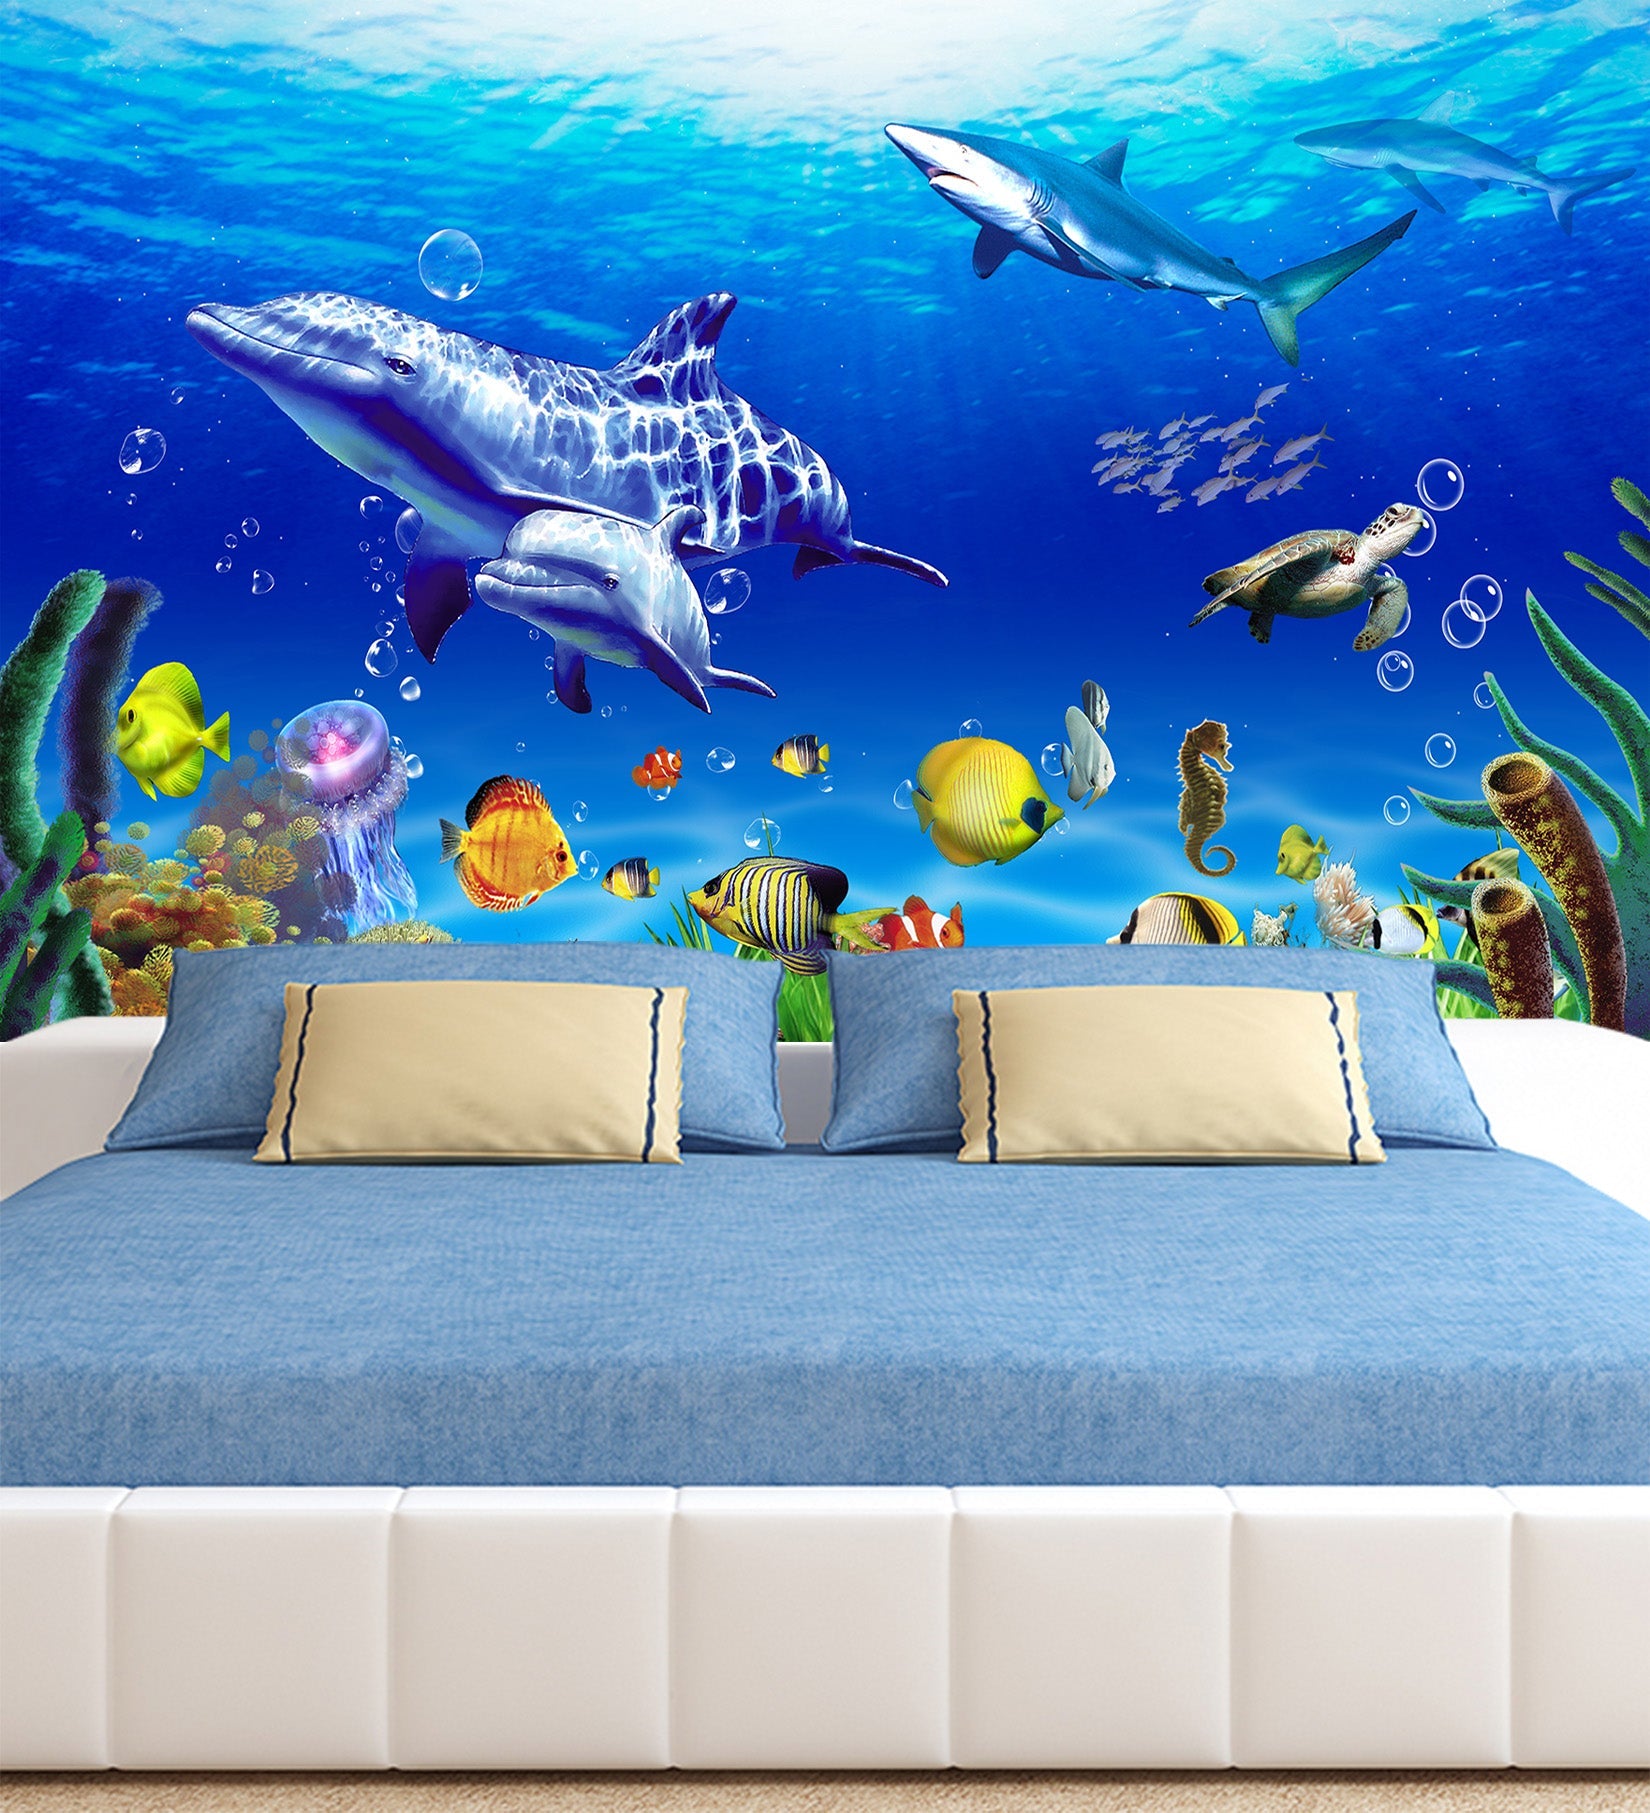 3D Underwater World 035 Wall Murals Wallpaper AJ Wallpaper 2 